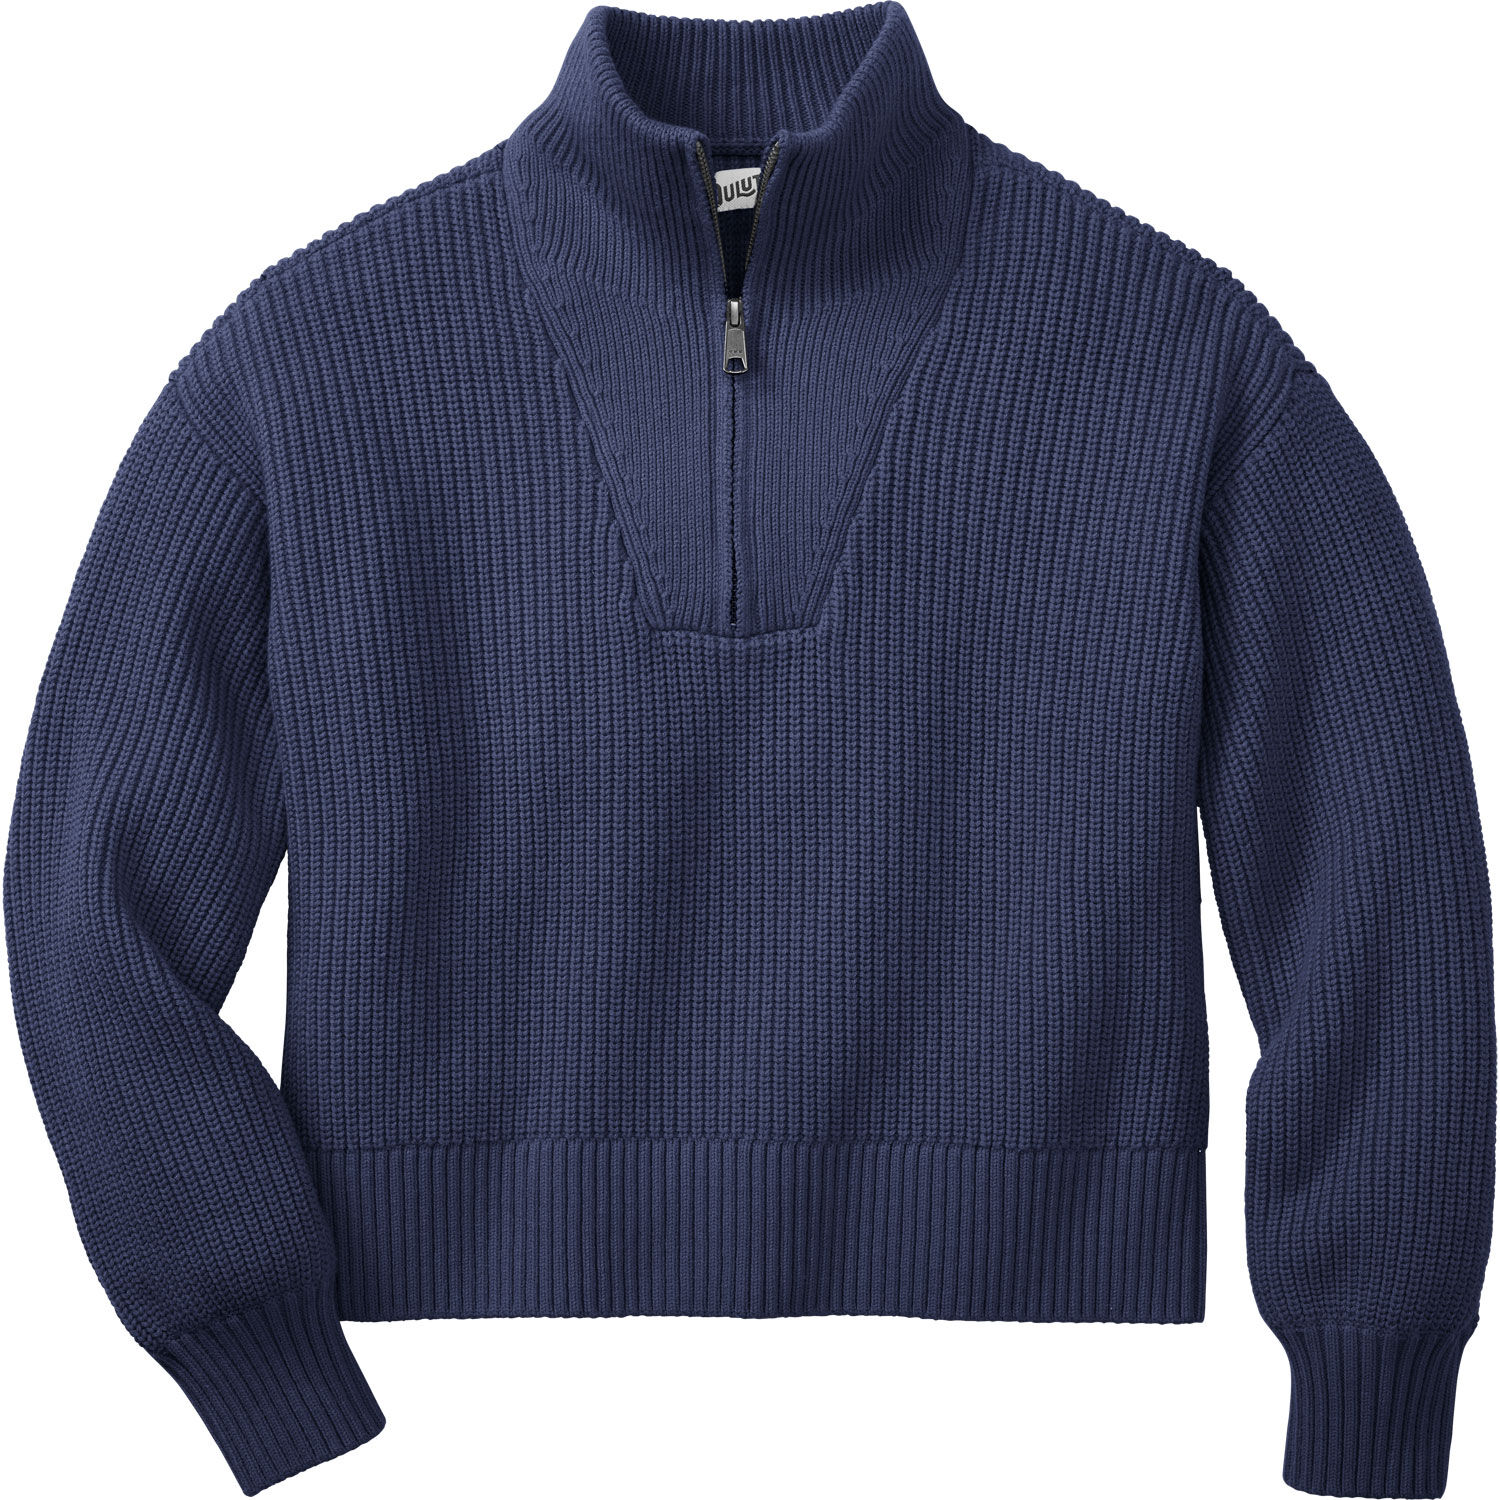 Women's Brigadier Quarter Zip Sweater | Duluth Trading Company